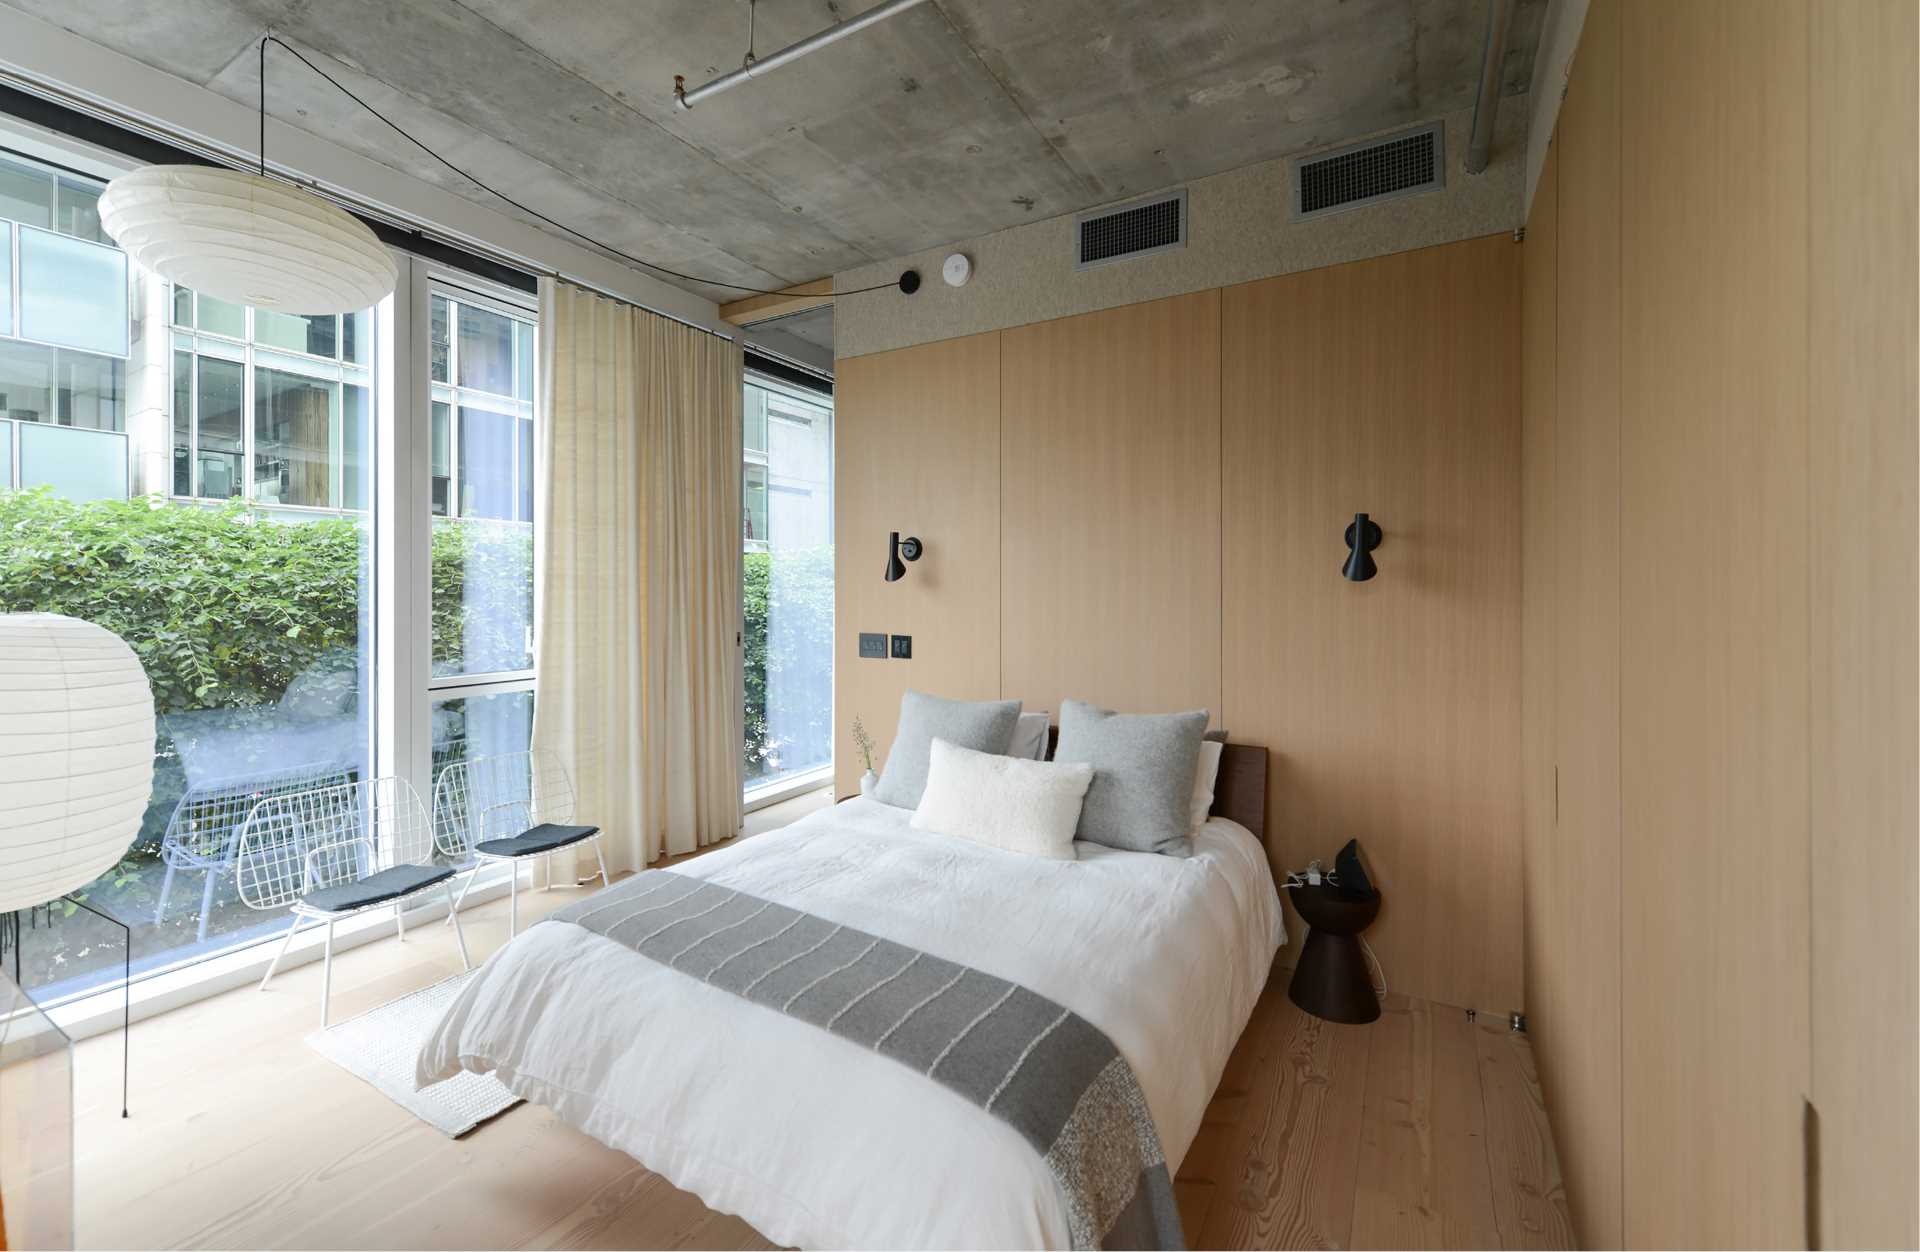 A modern bedroom filled with an abundance of natural light.